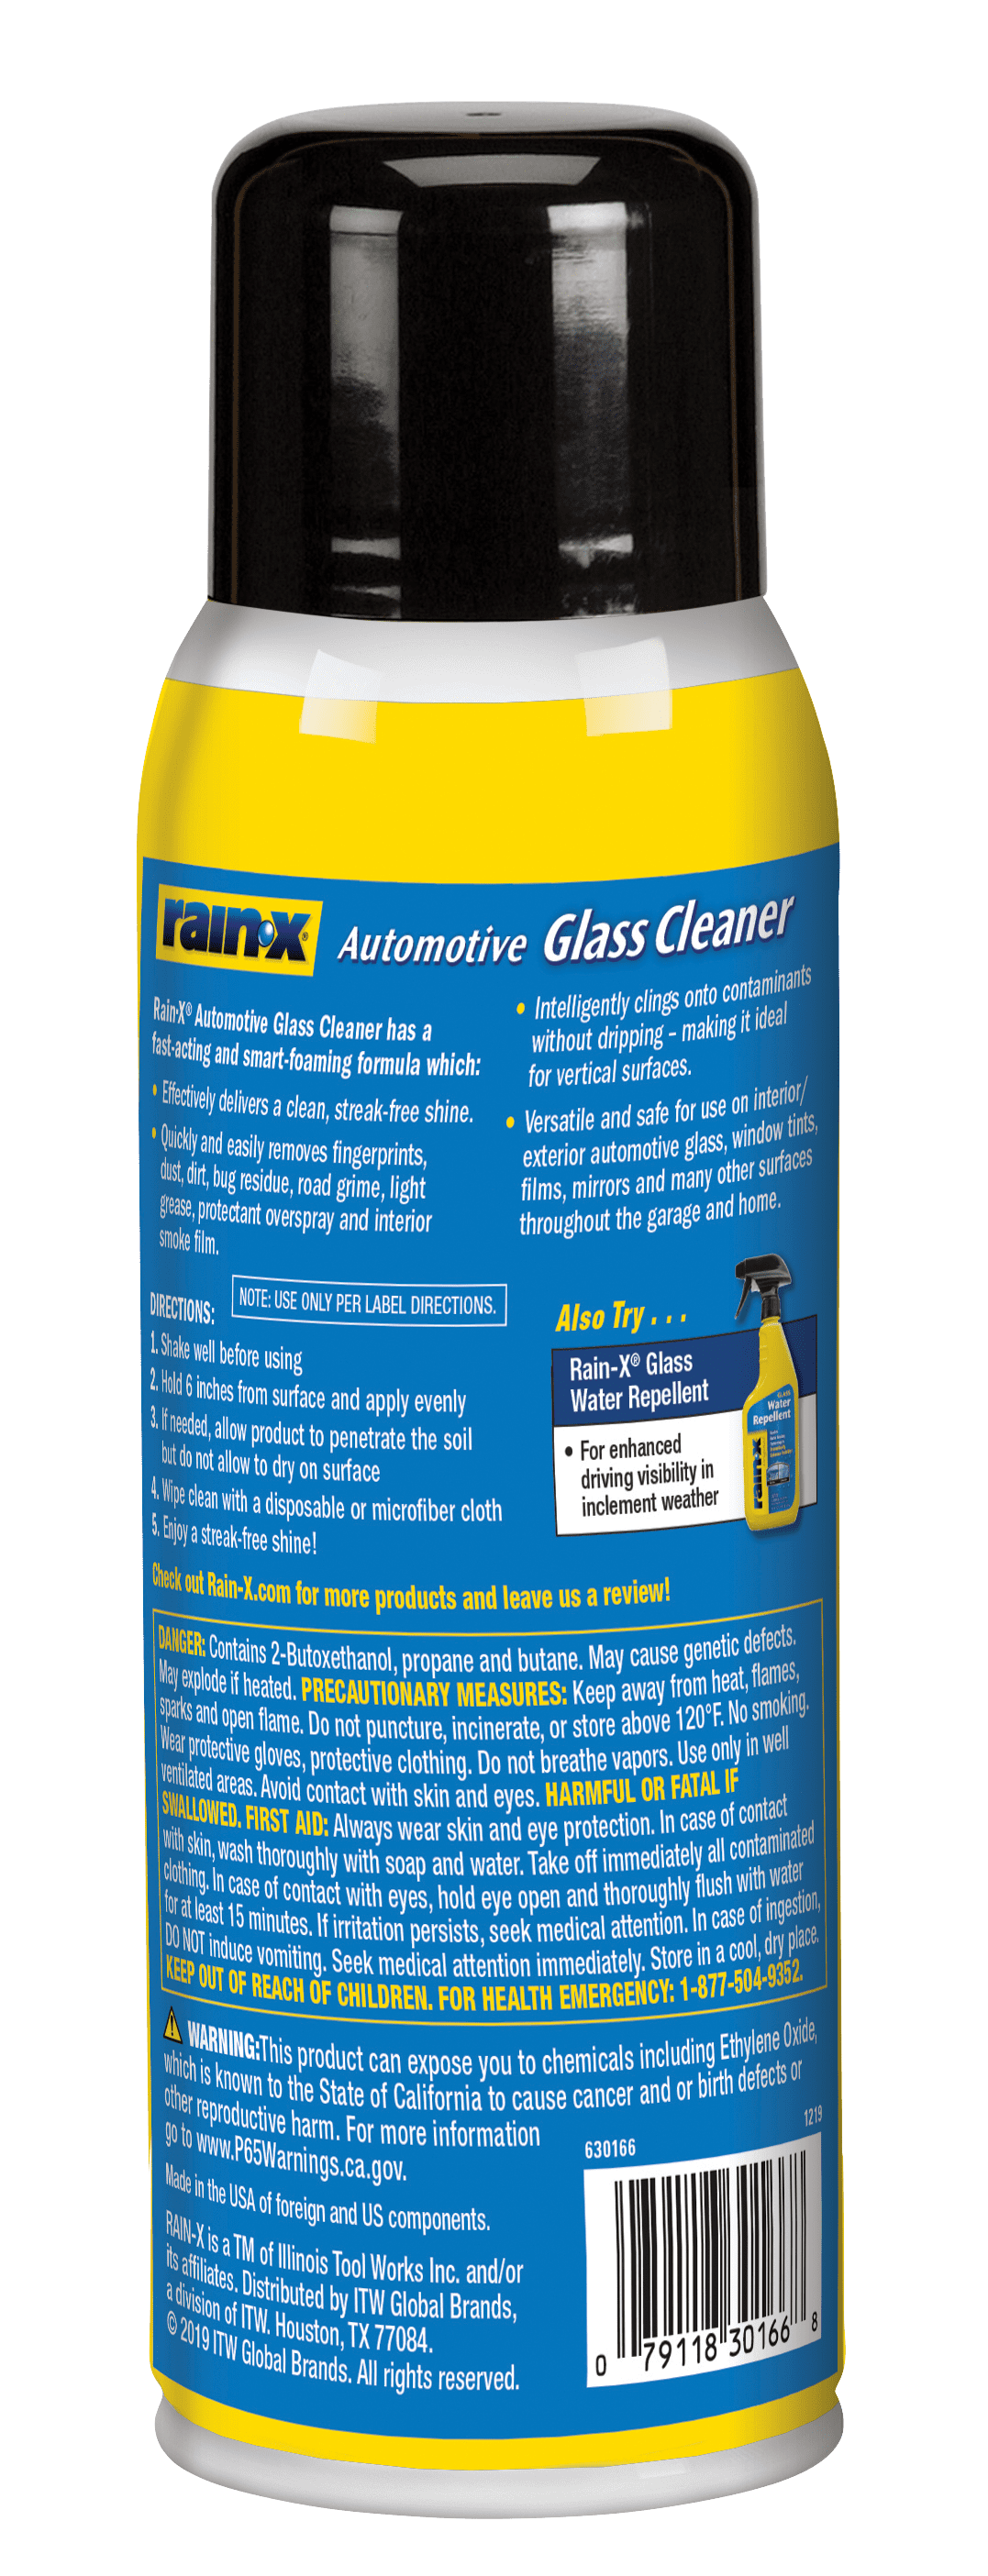 Rain-X 2-In-1 Glass Cleaner Plus Rain Repellent: Streak-Free Shine